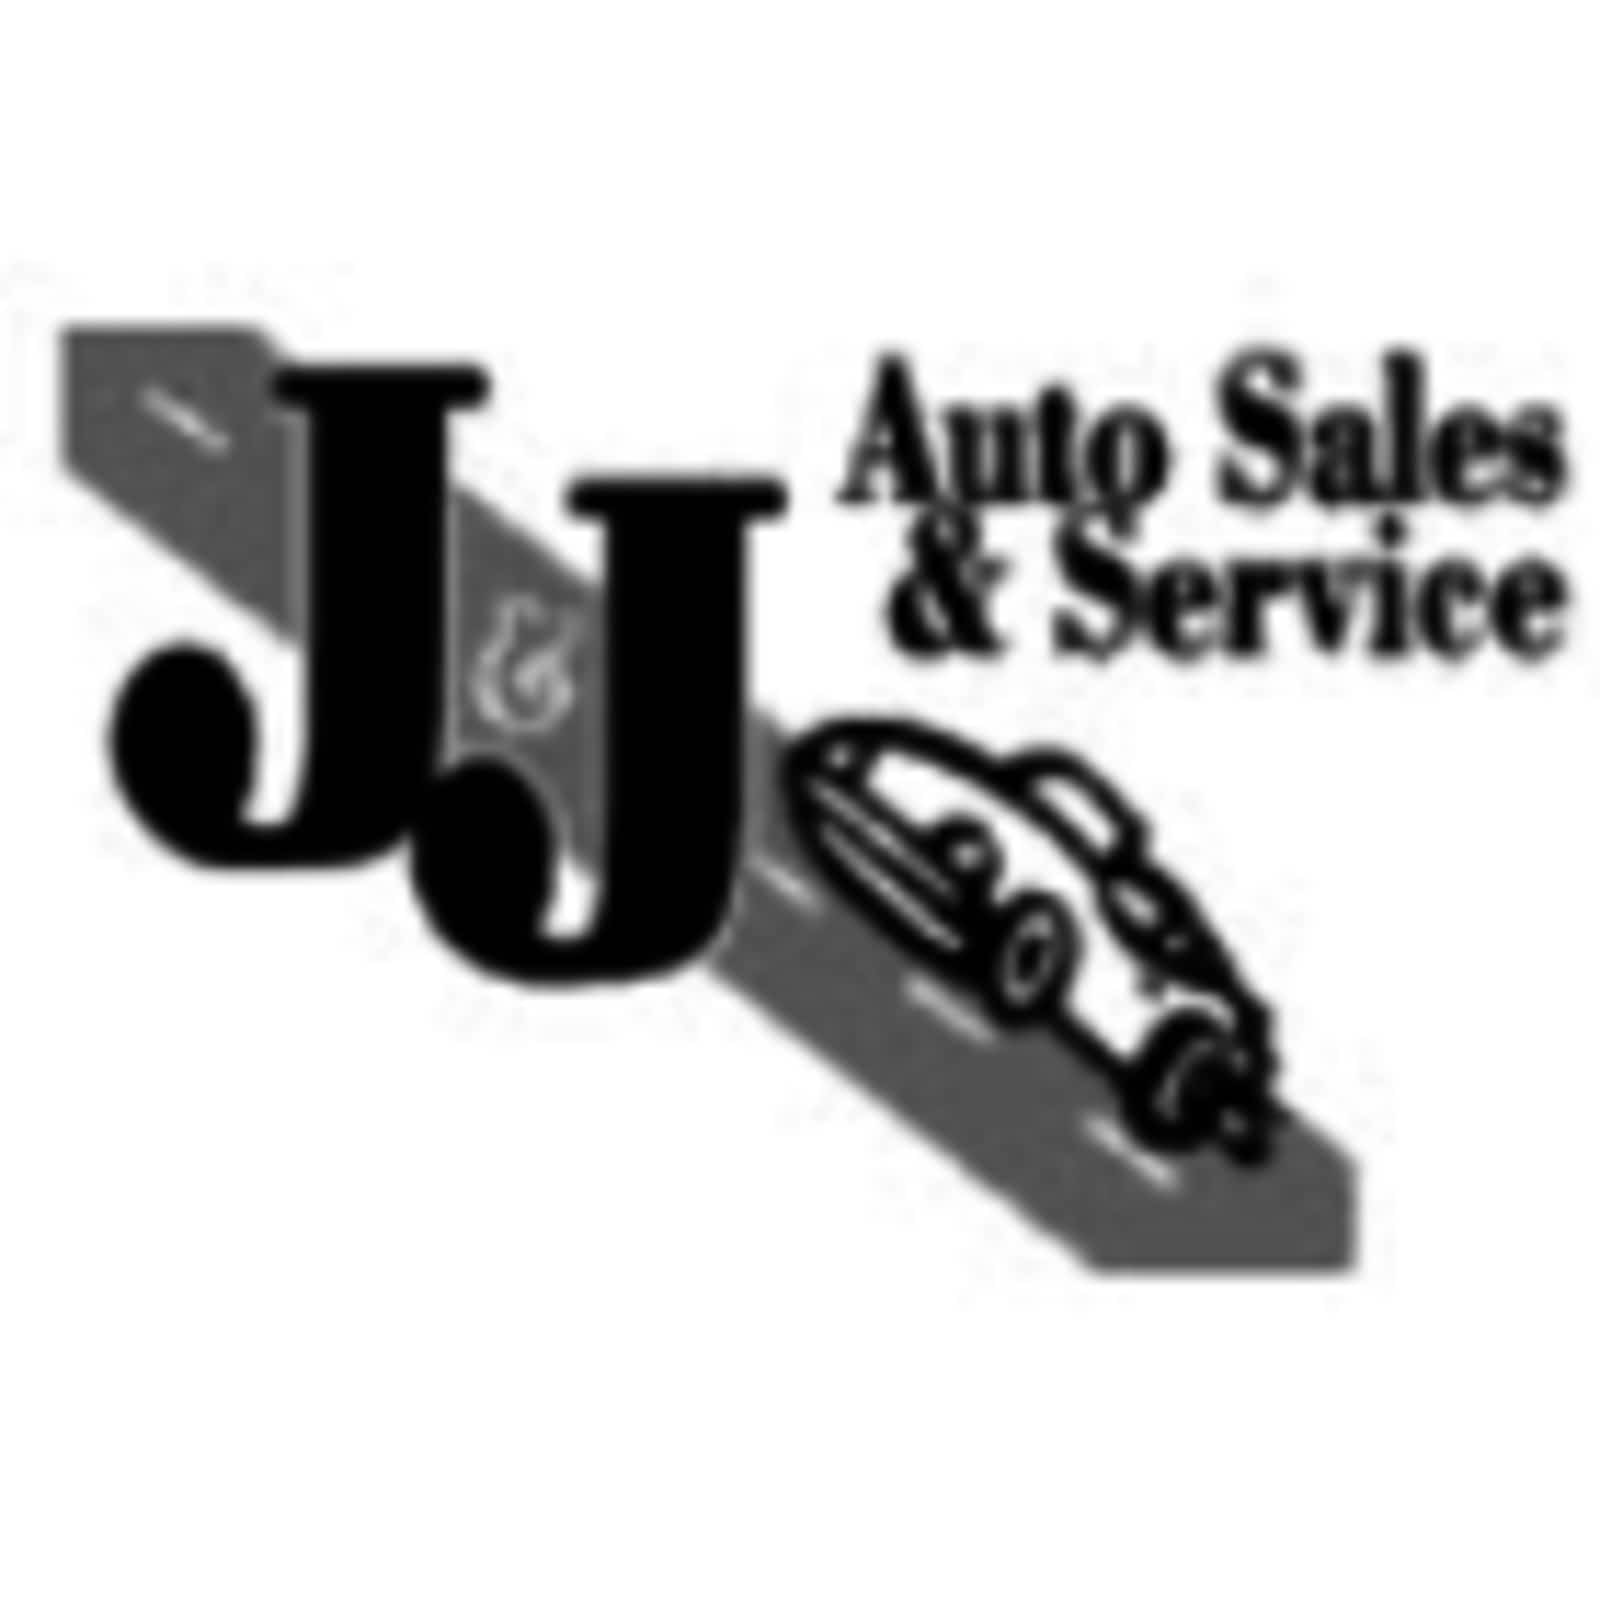 J & J Auto Sales And Service